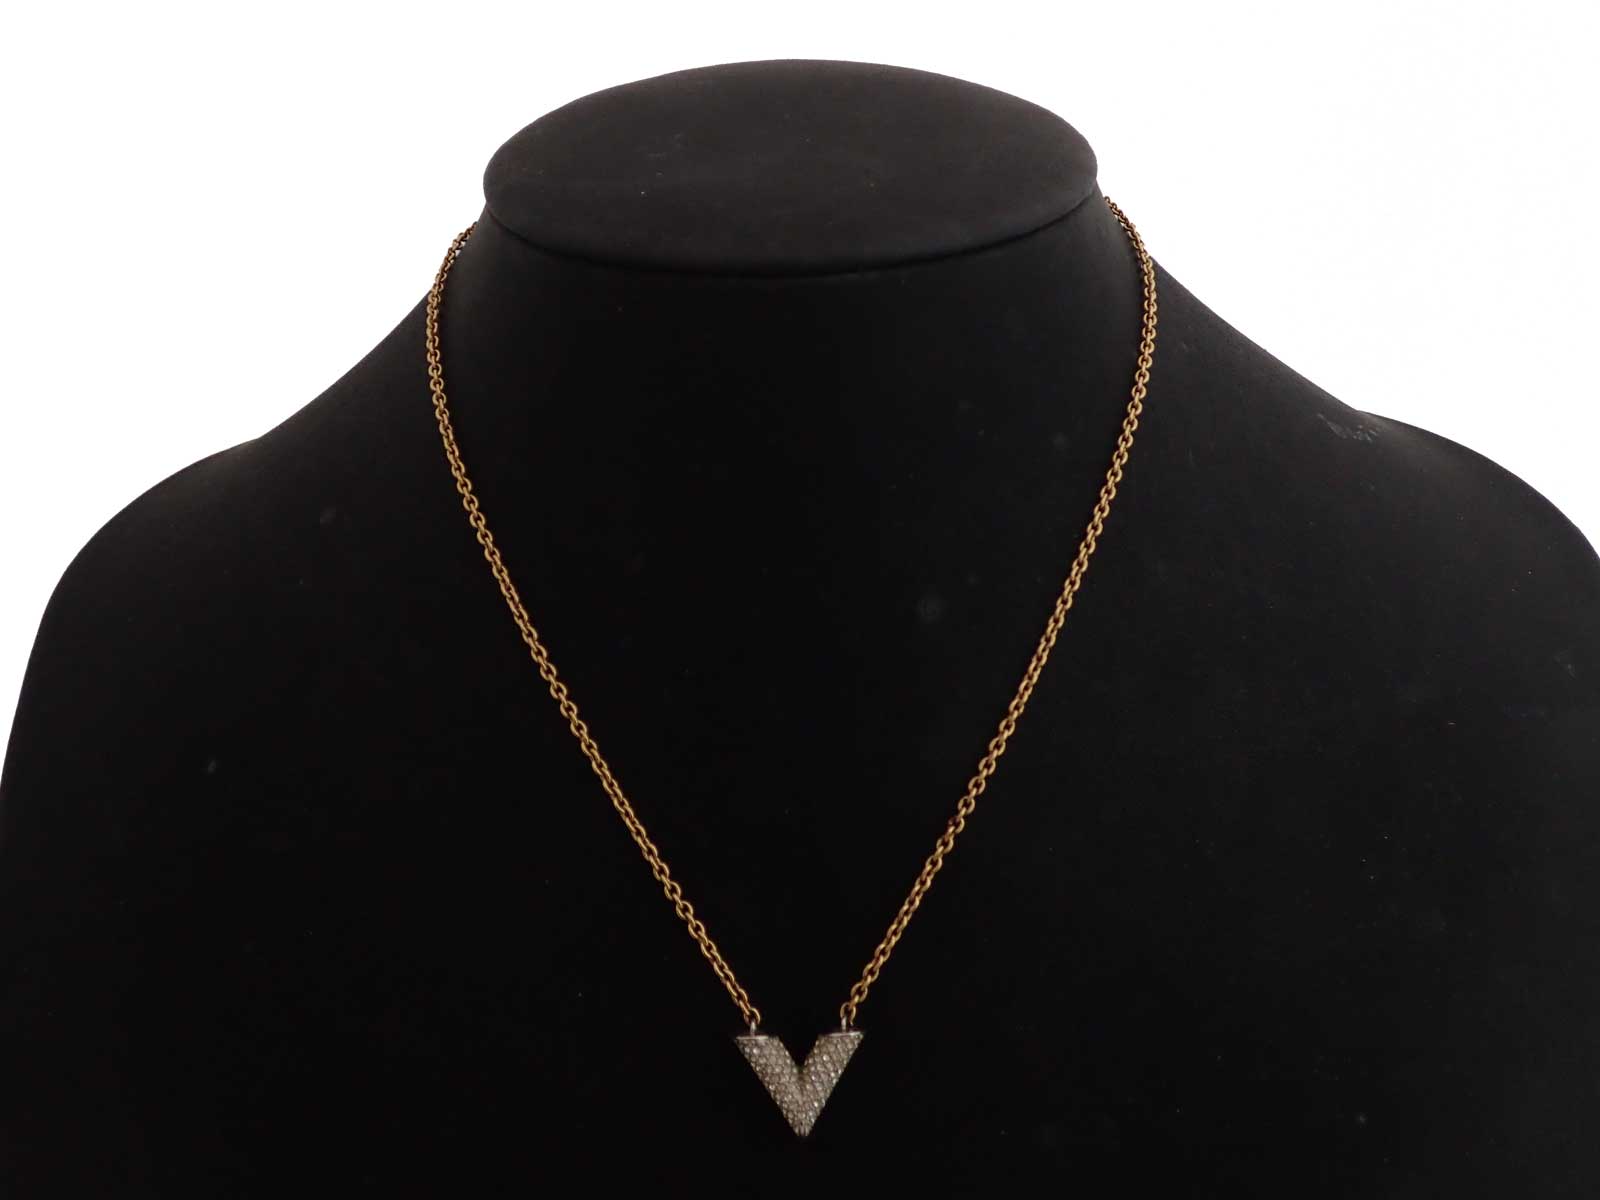 Auth Louis Vuitton Chain Necklace Silver/Goldtone Rhinestone/Metal - e46038d | eBay